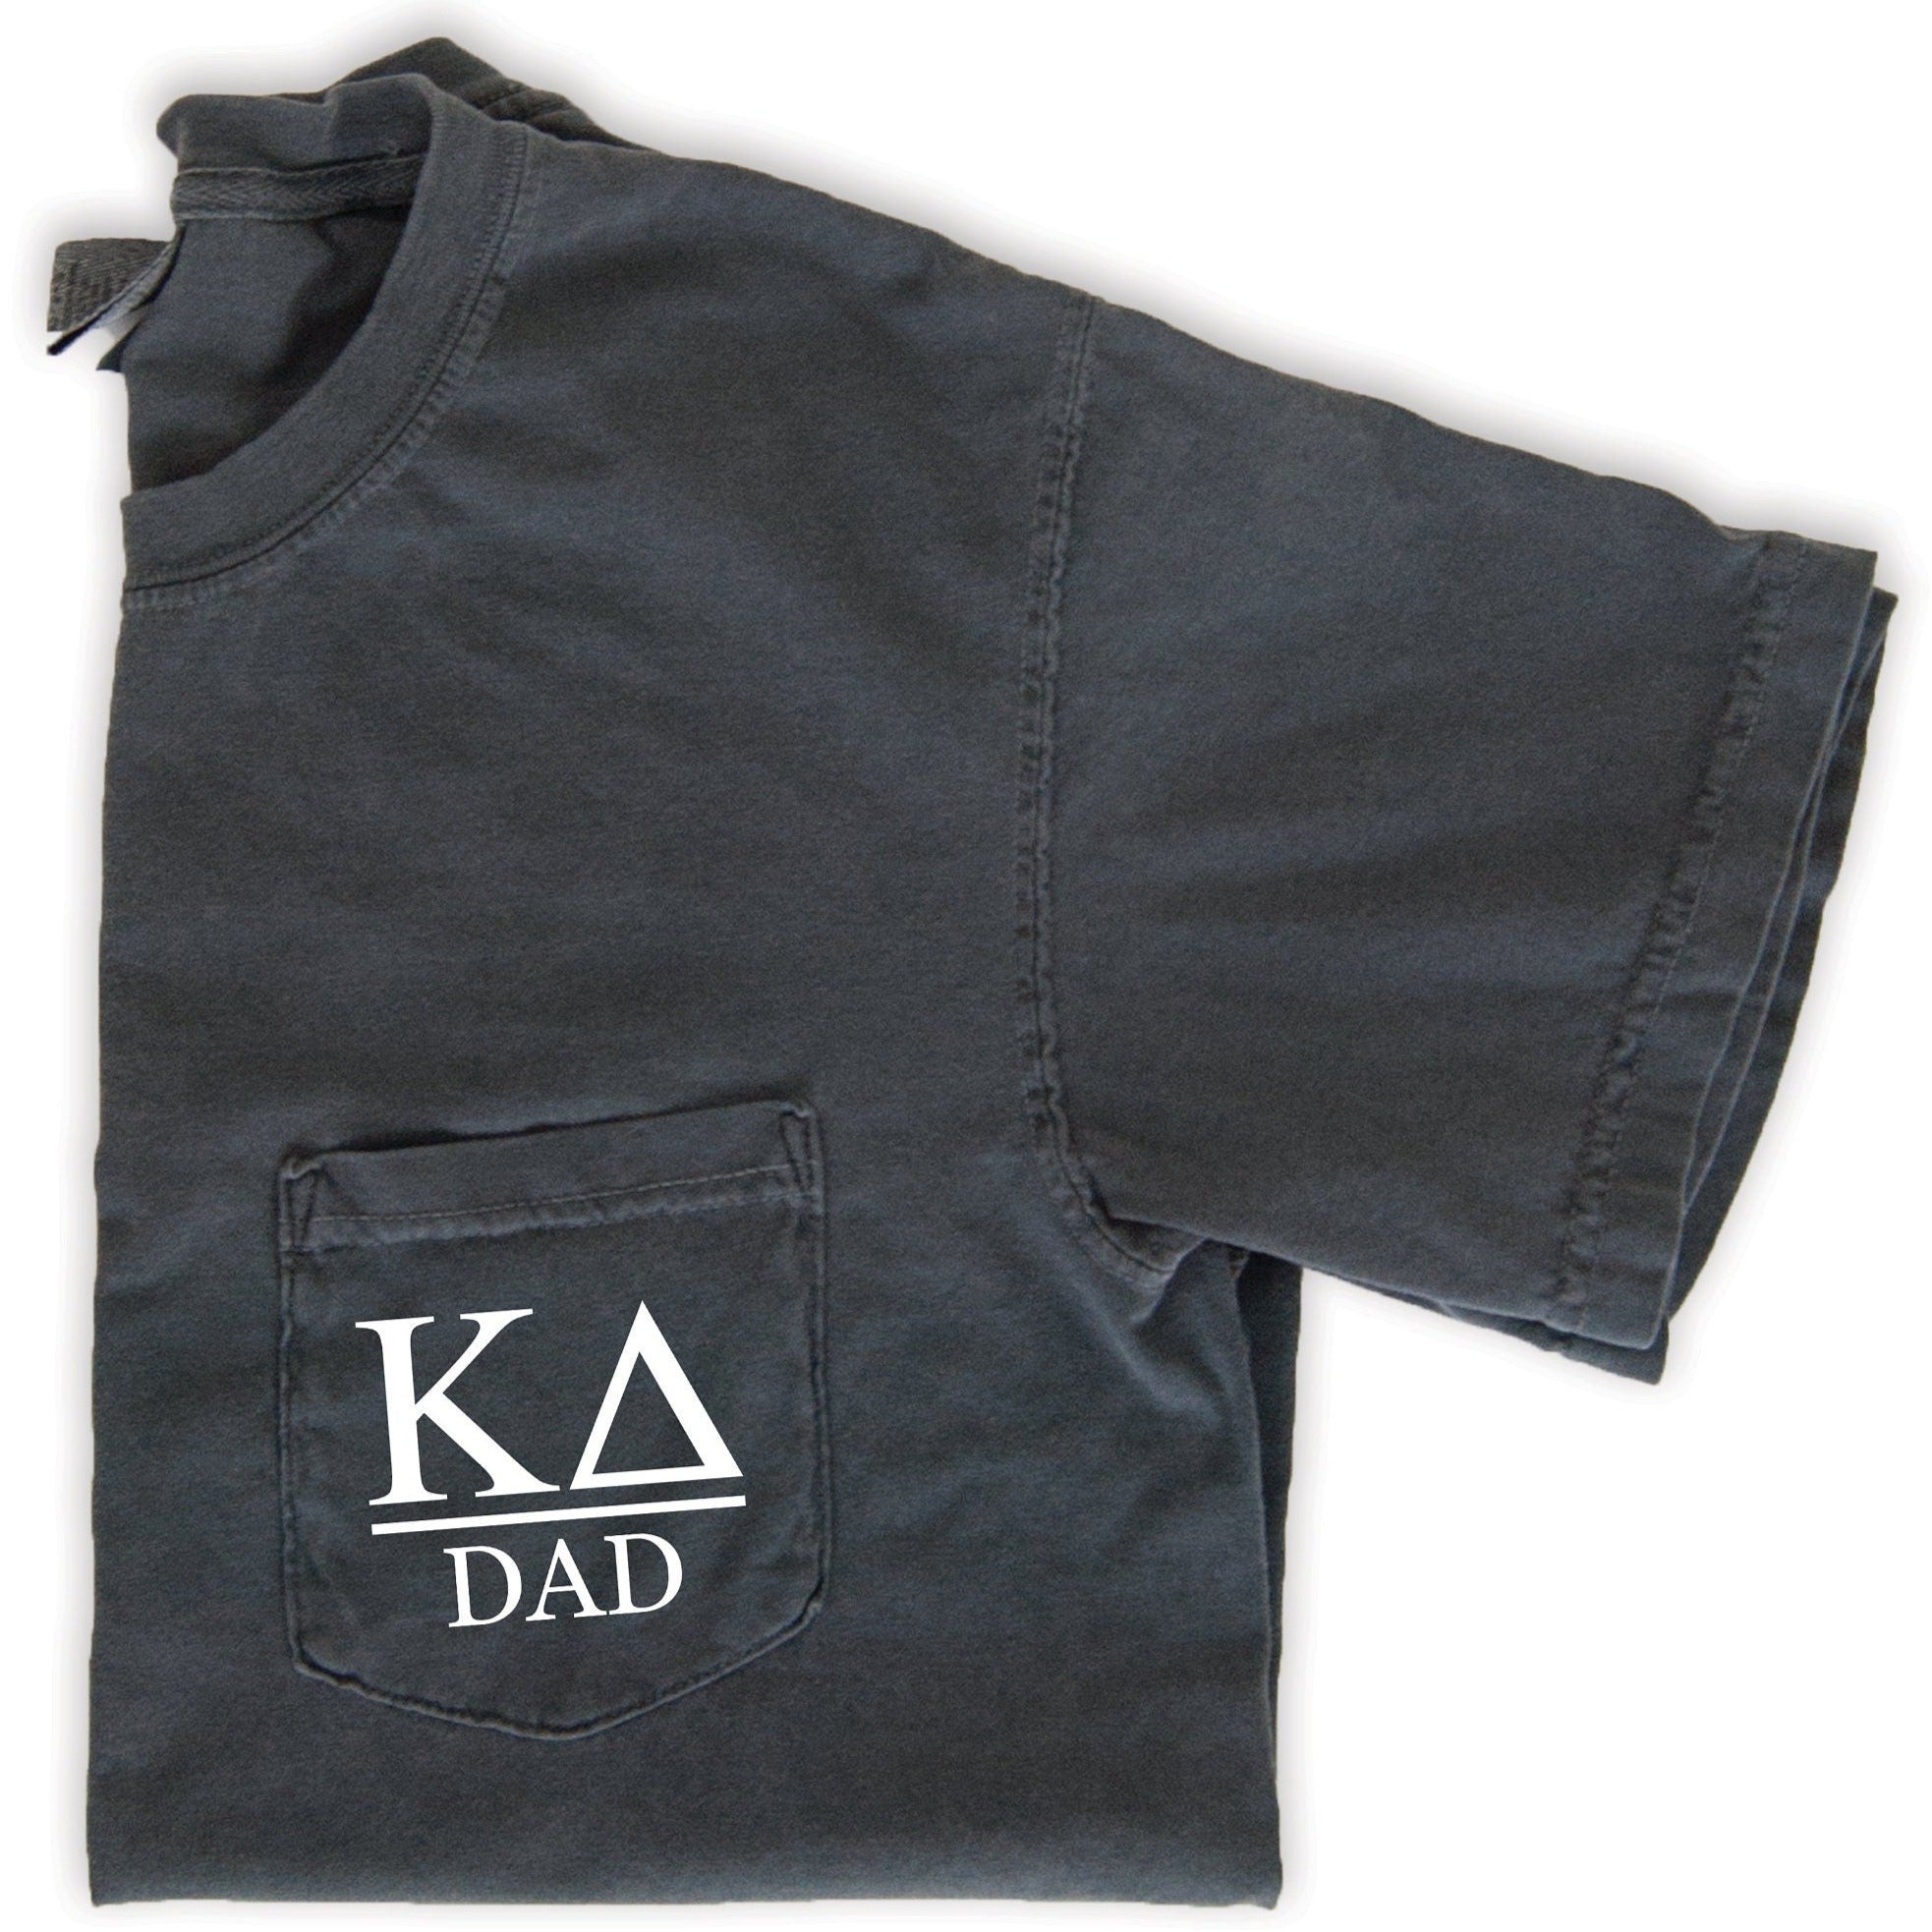 Kappa Delta Dad T-Shirt - Grey - Go Greek Chic